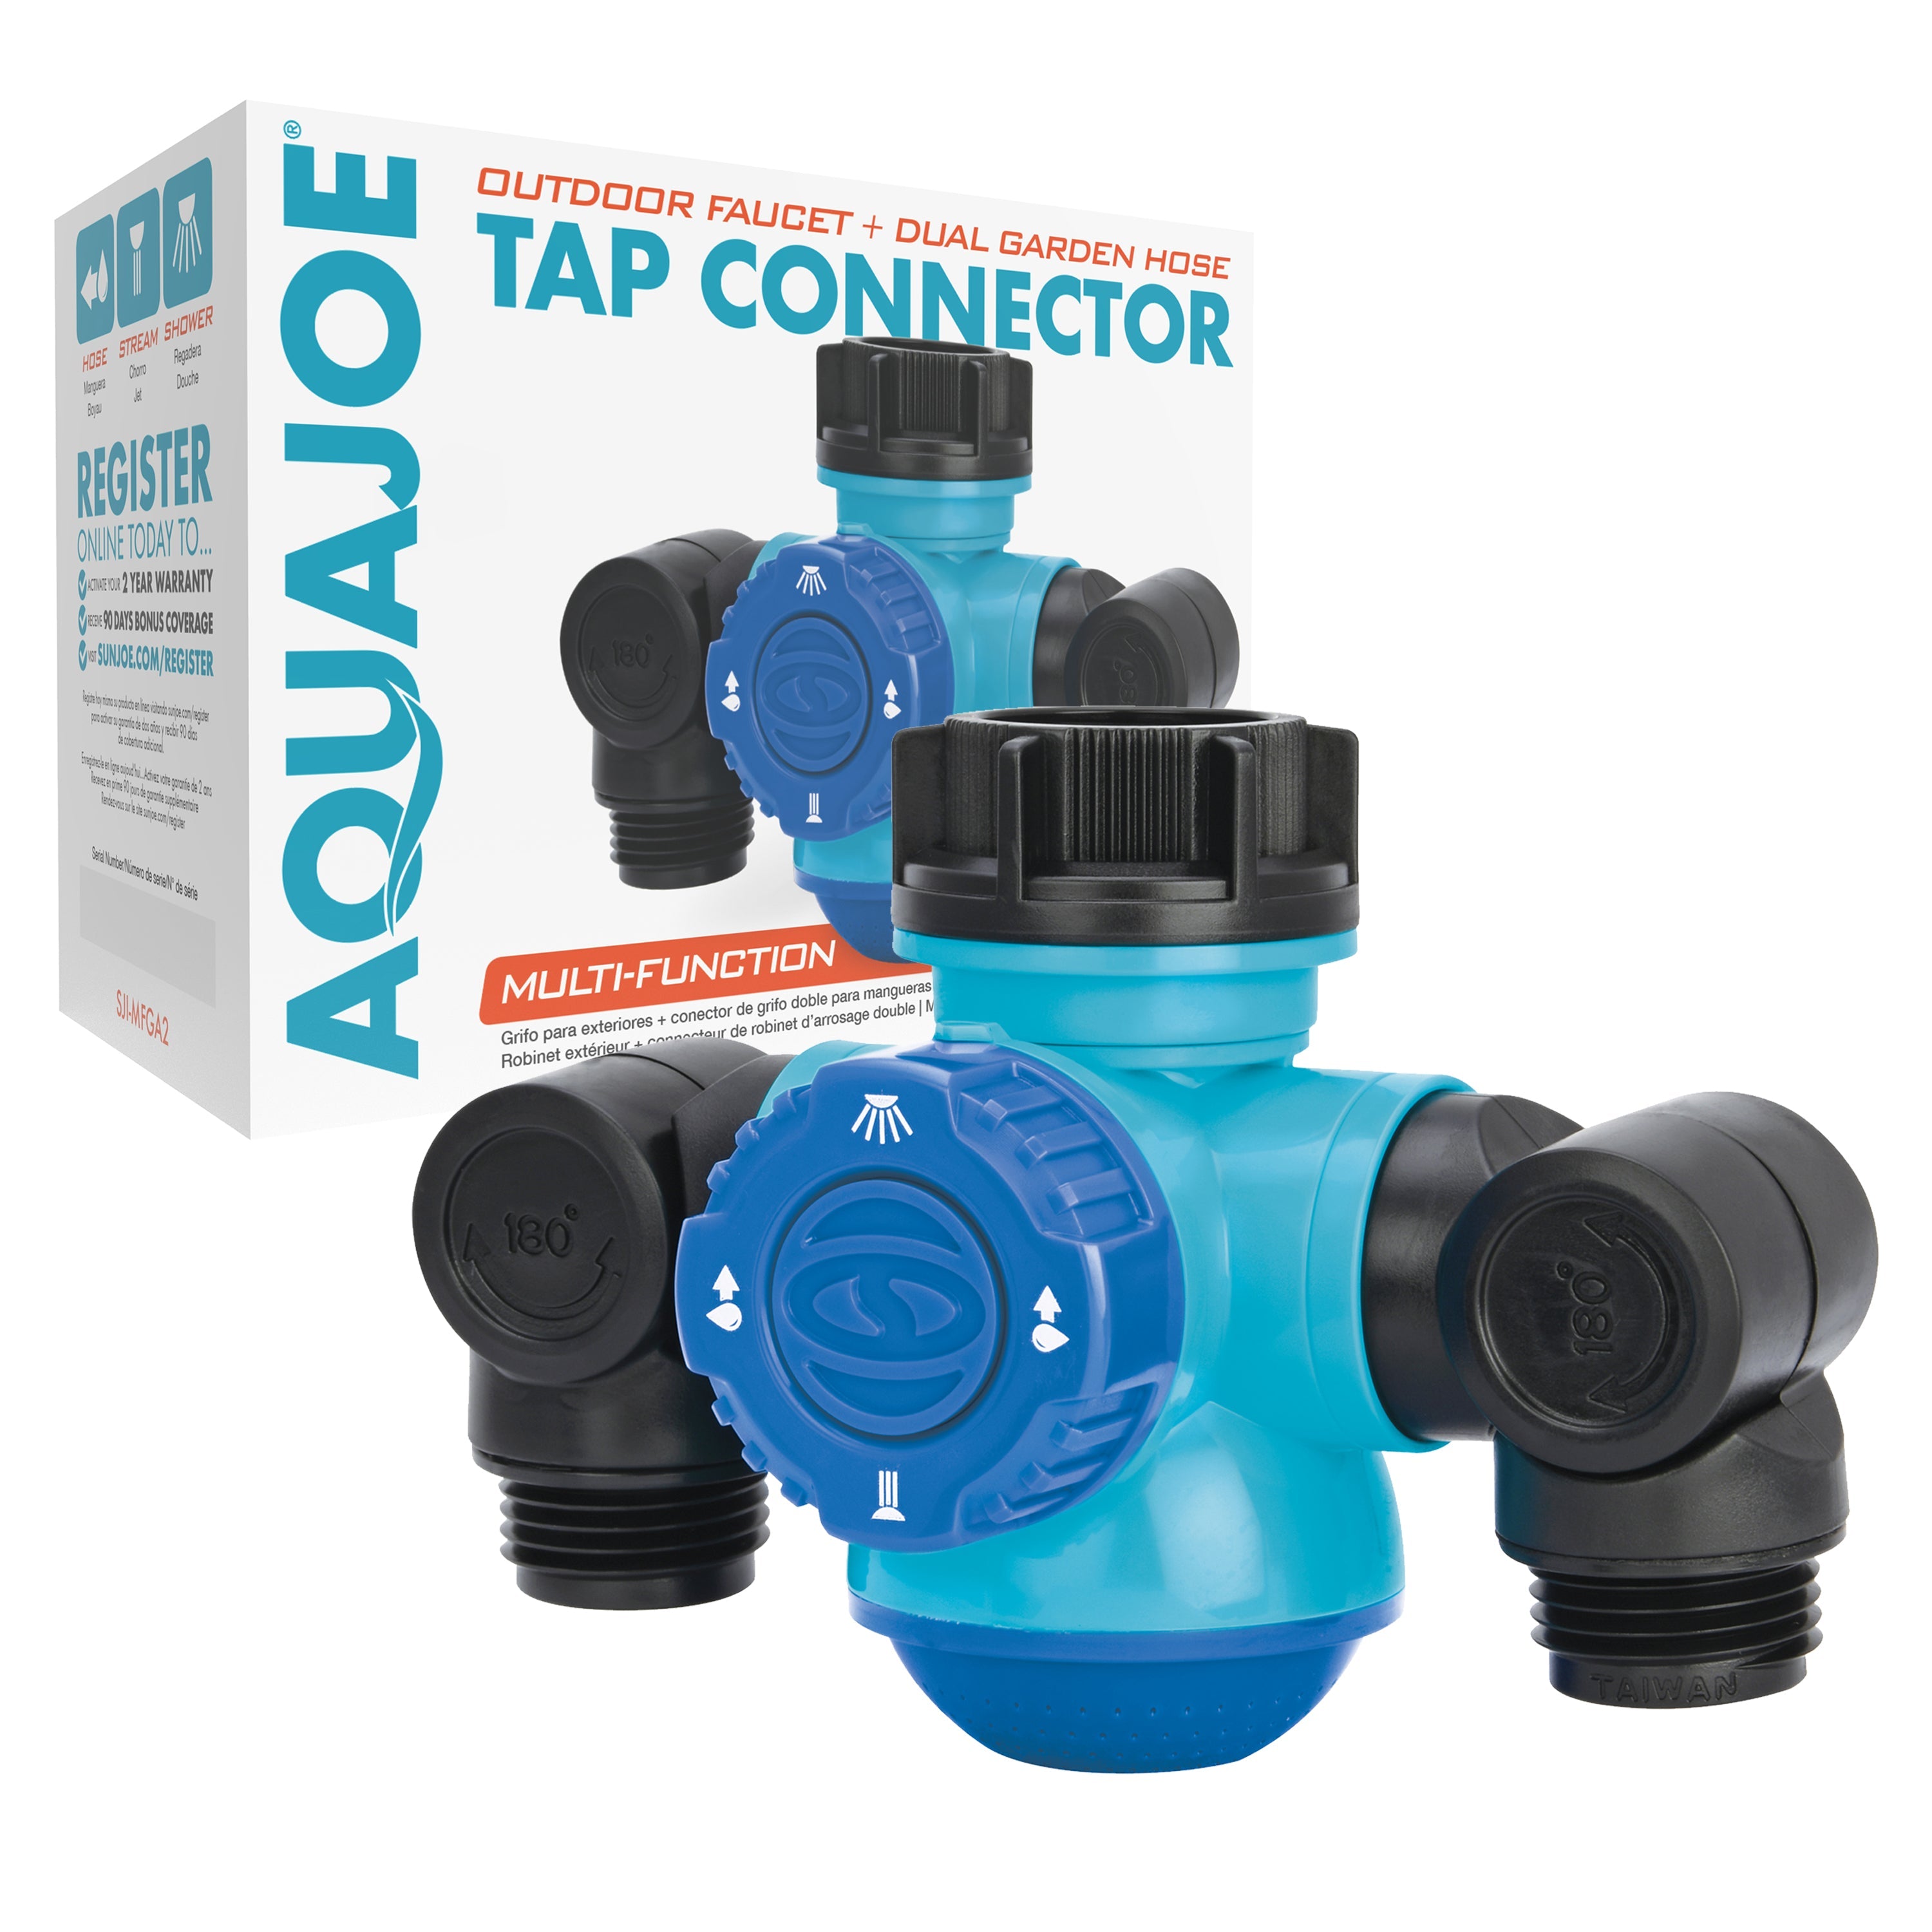 Aqua Joe SJI-MFGA2 Multi-Function Outdoor Faucet and Dual Garden Hose Tap Connecter